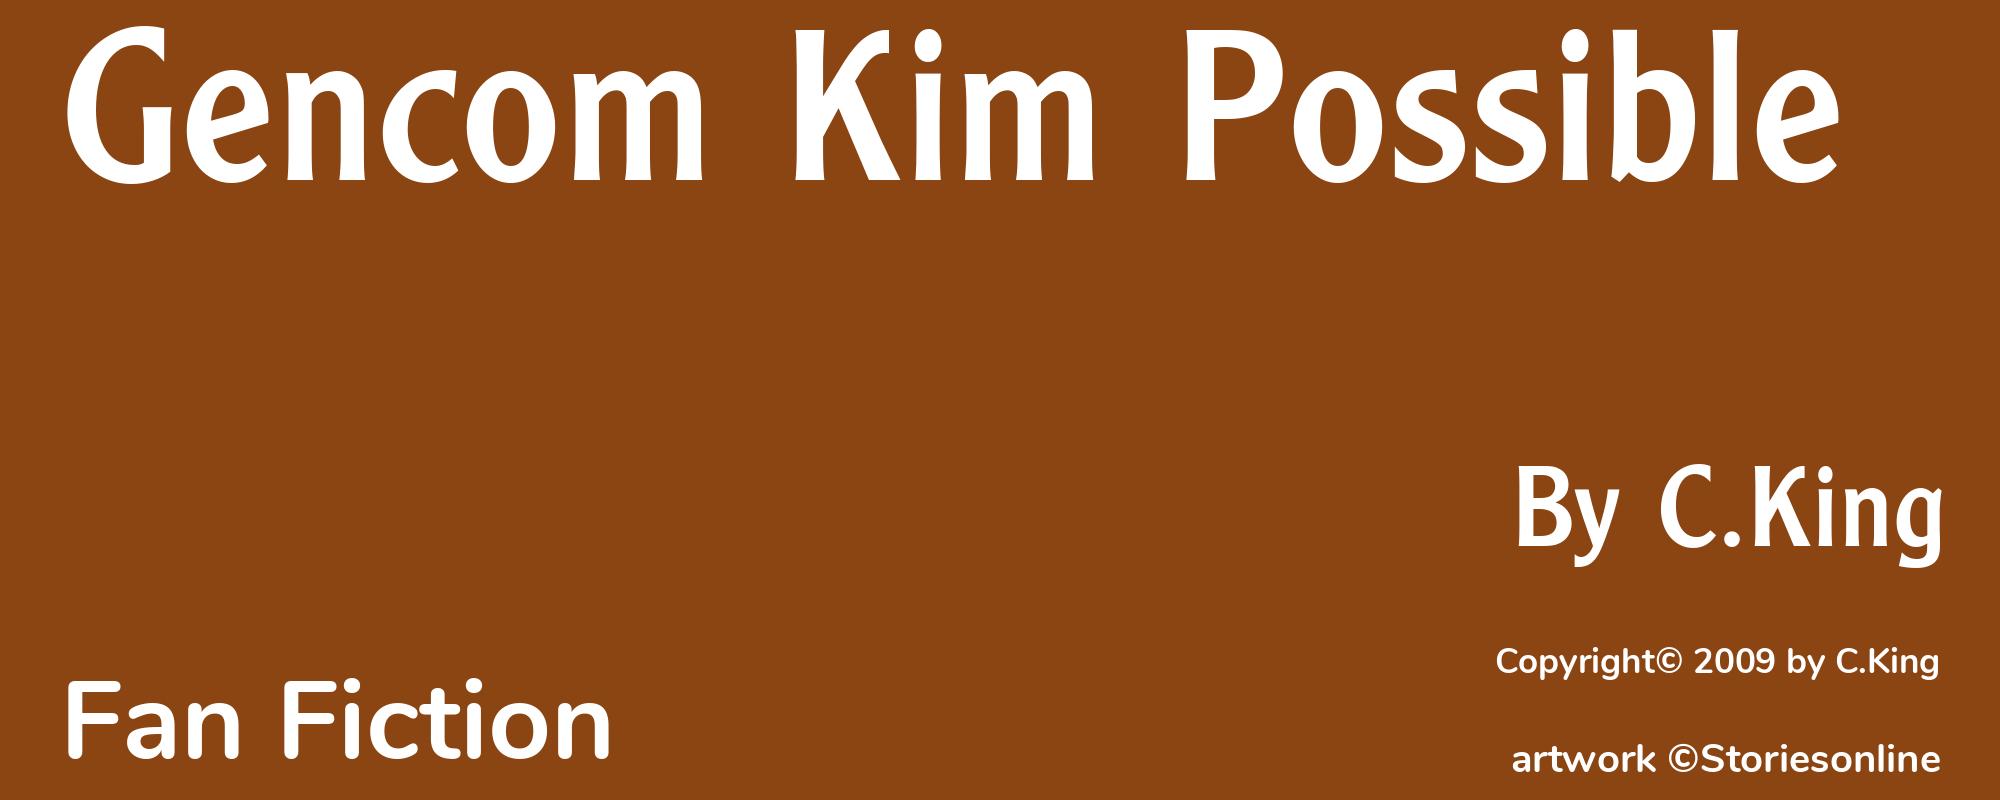 Gencom Kim Possible - Cover